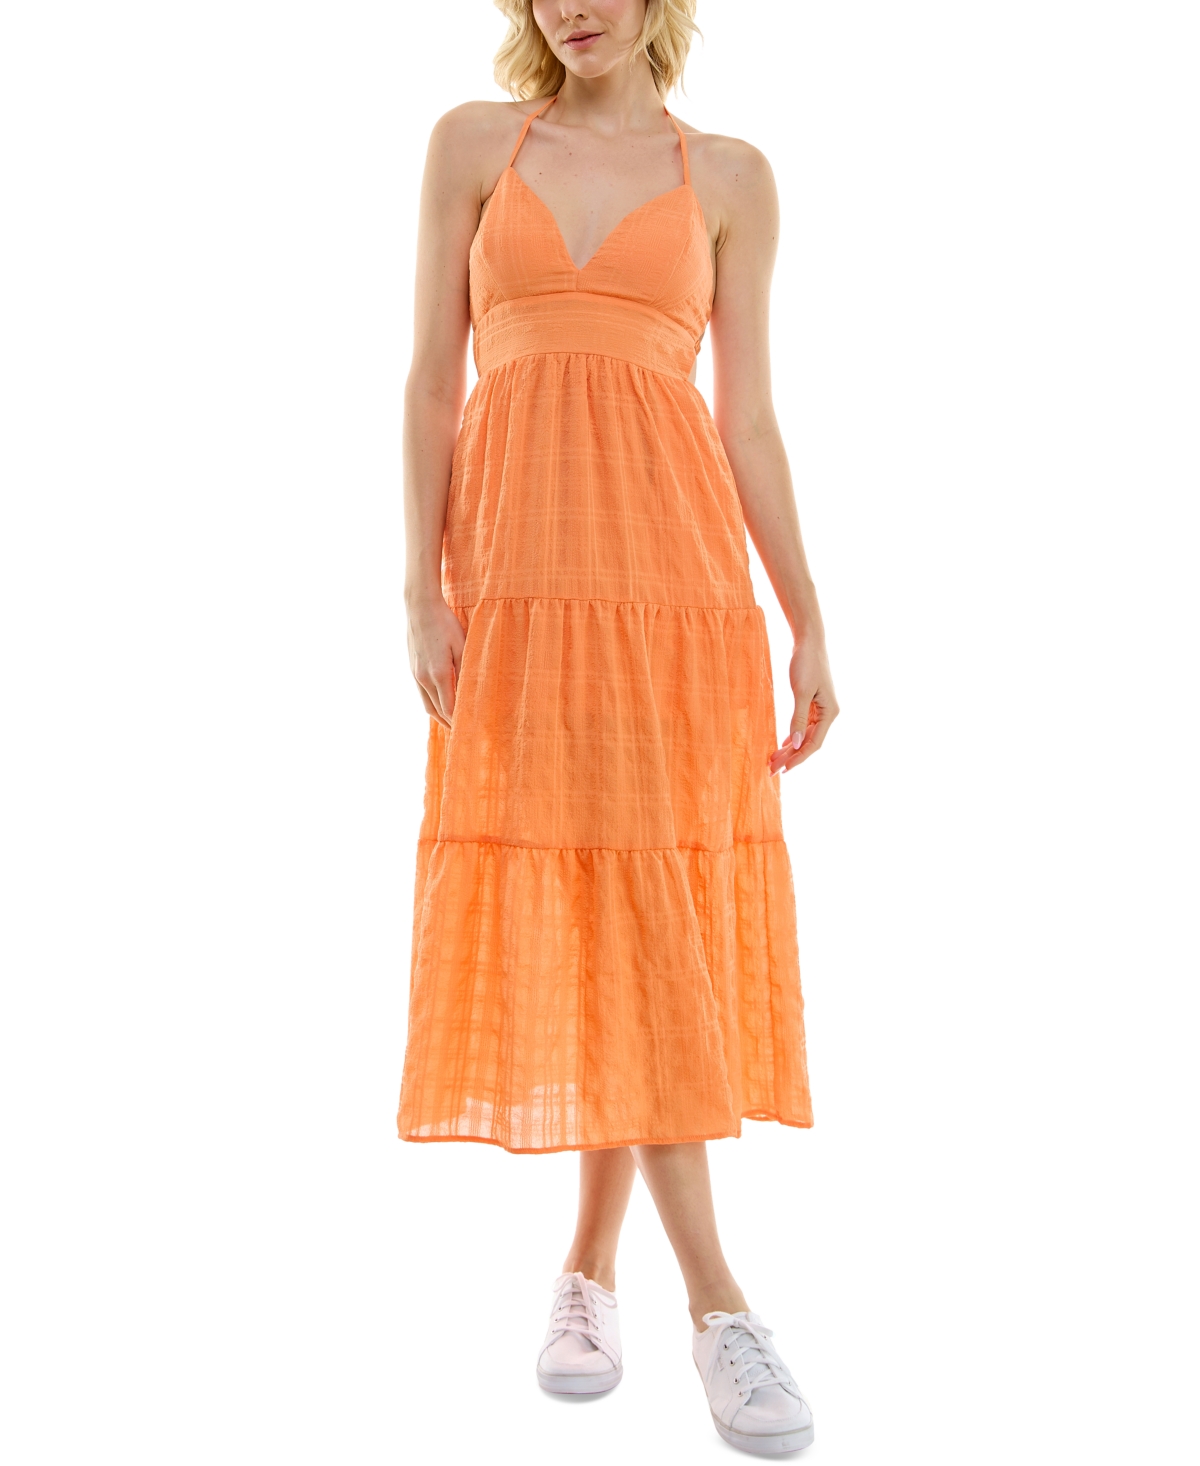 Juniors' Printed Sleeveless Halter Midi Dress - Apricot Jm